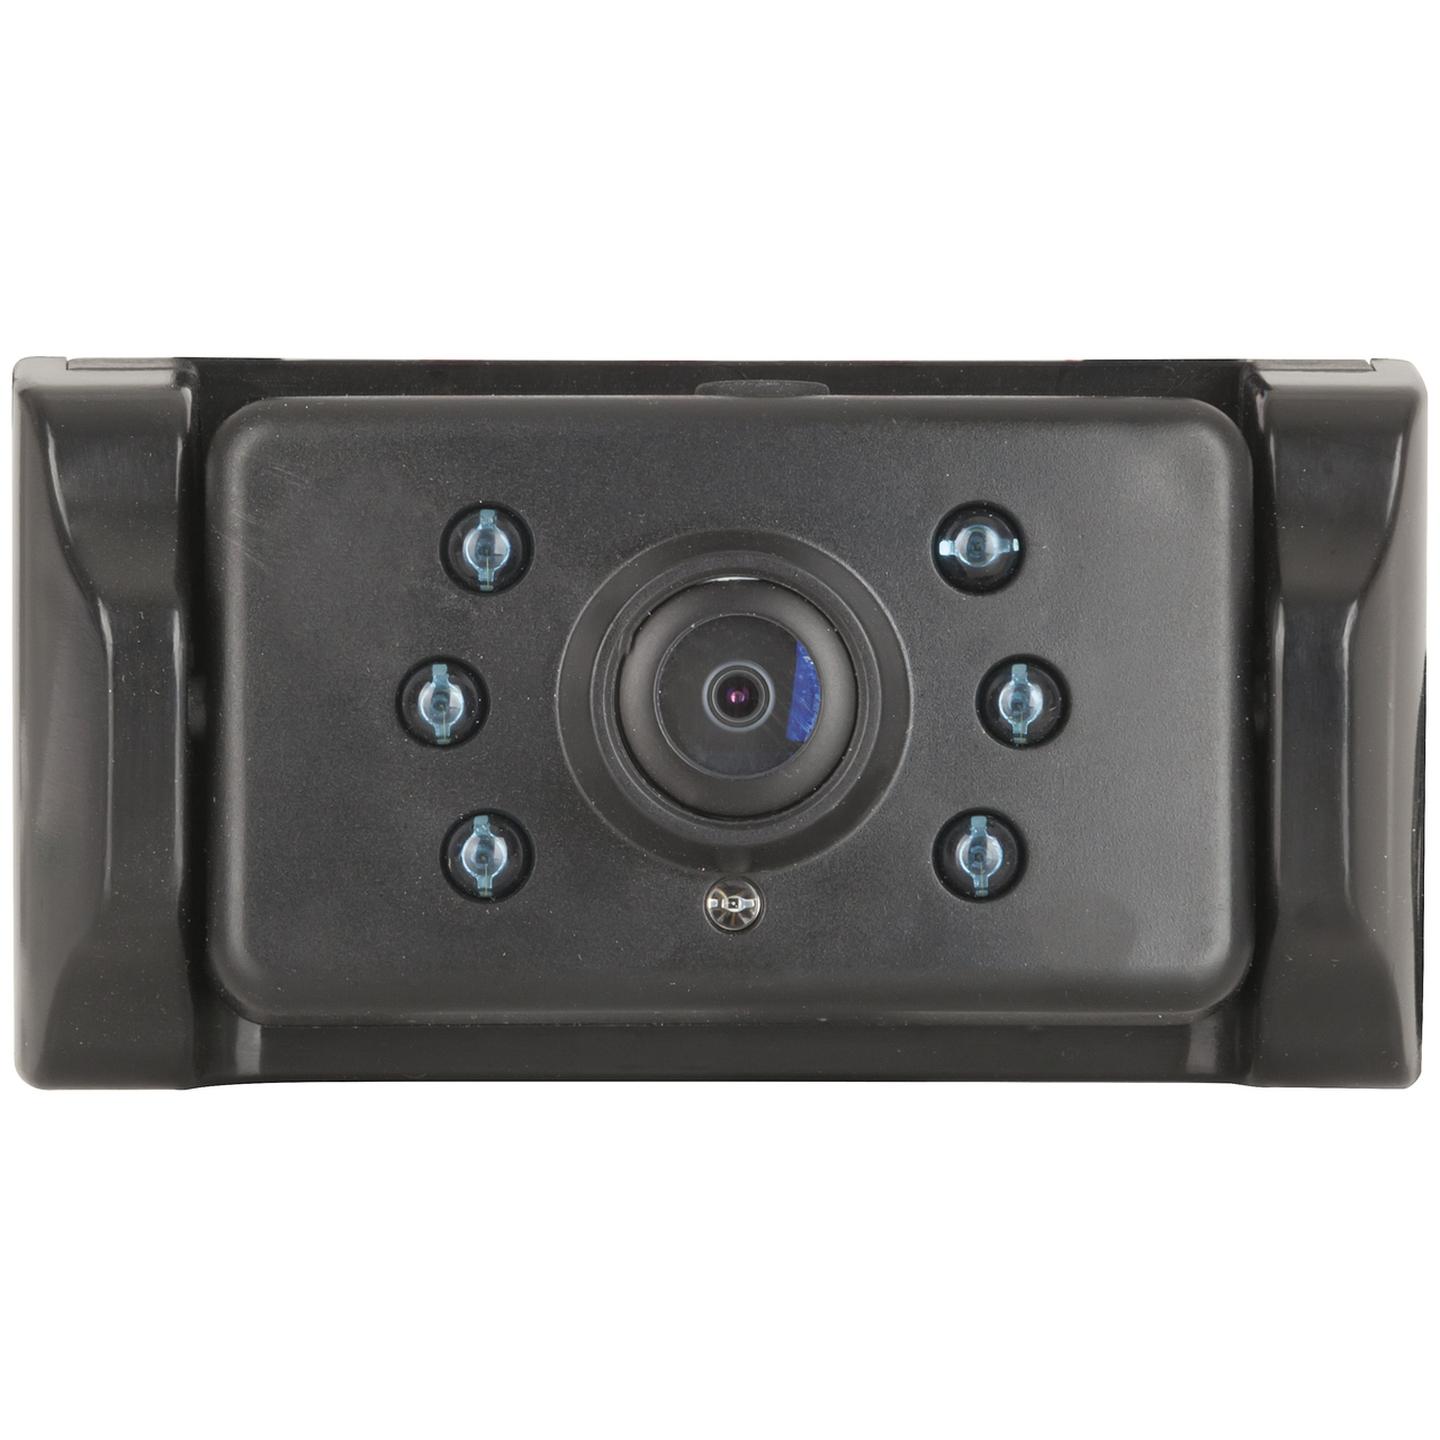 Spare Wireless Camera to suit QM-3840/QM-3852 Reversing Camera Kits